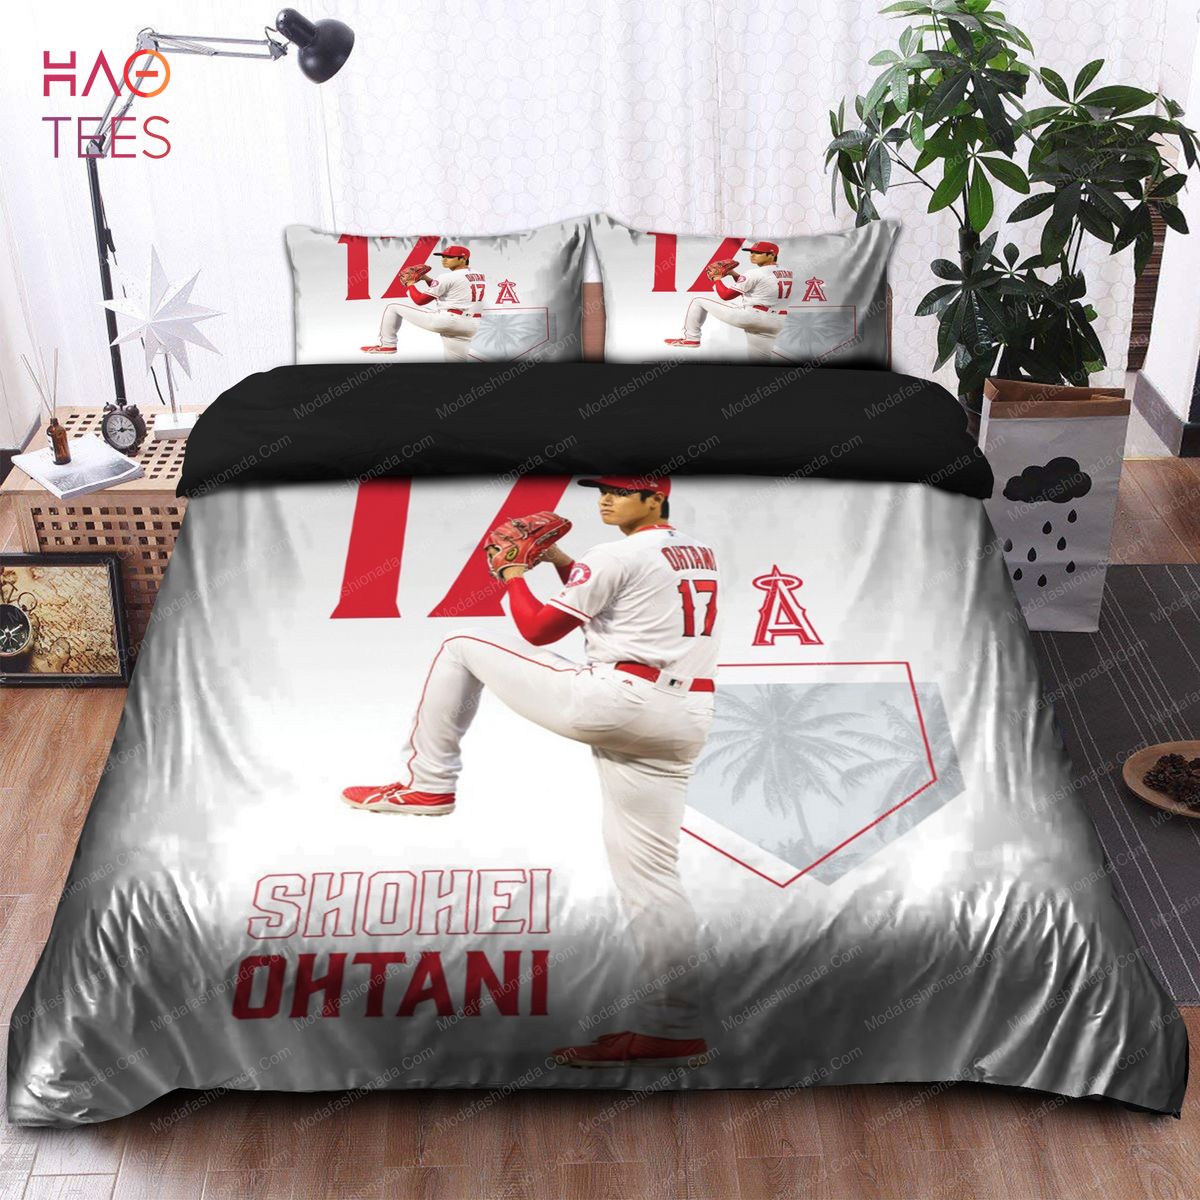 HOT Japanese Shohei Ohtani Los Angeles Angels MLB Bedding Sets POD Design